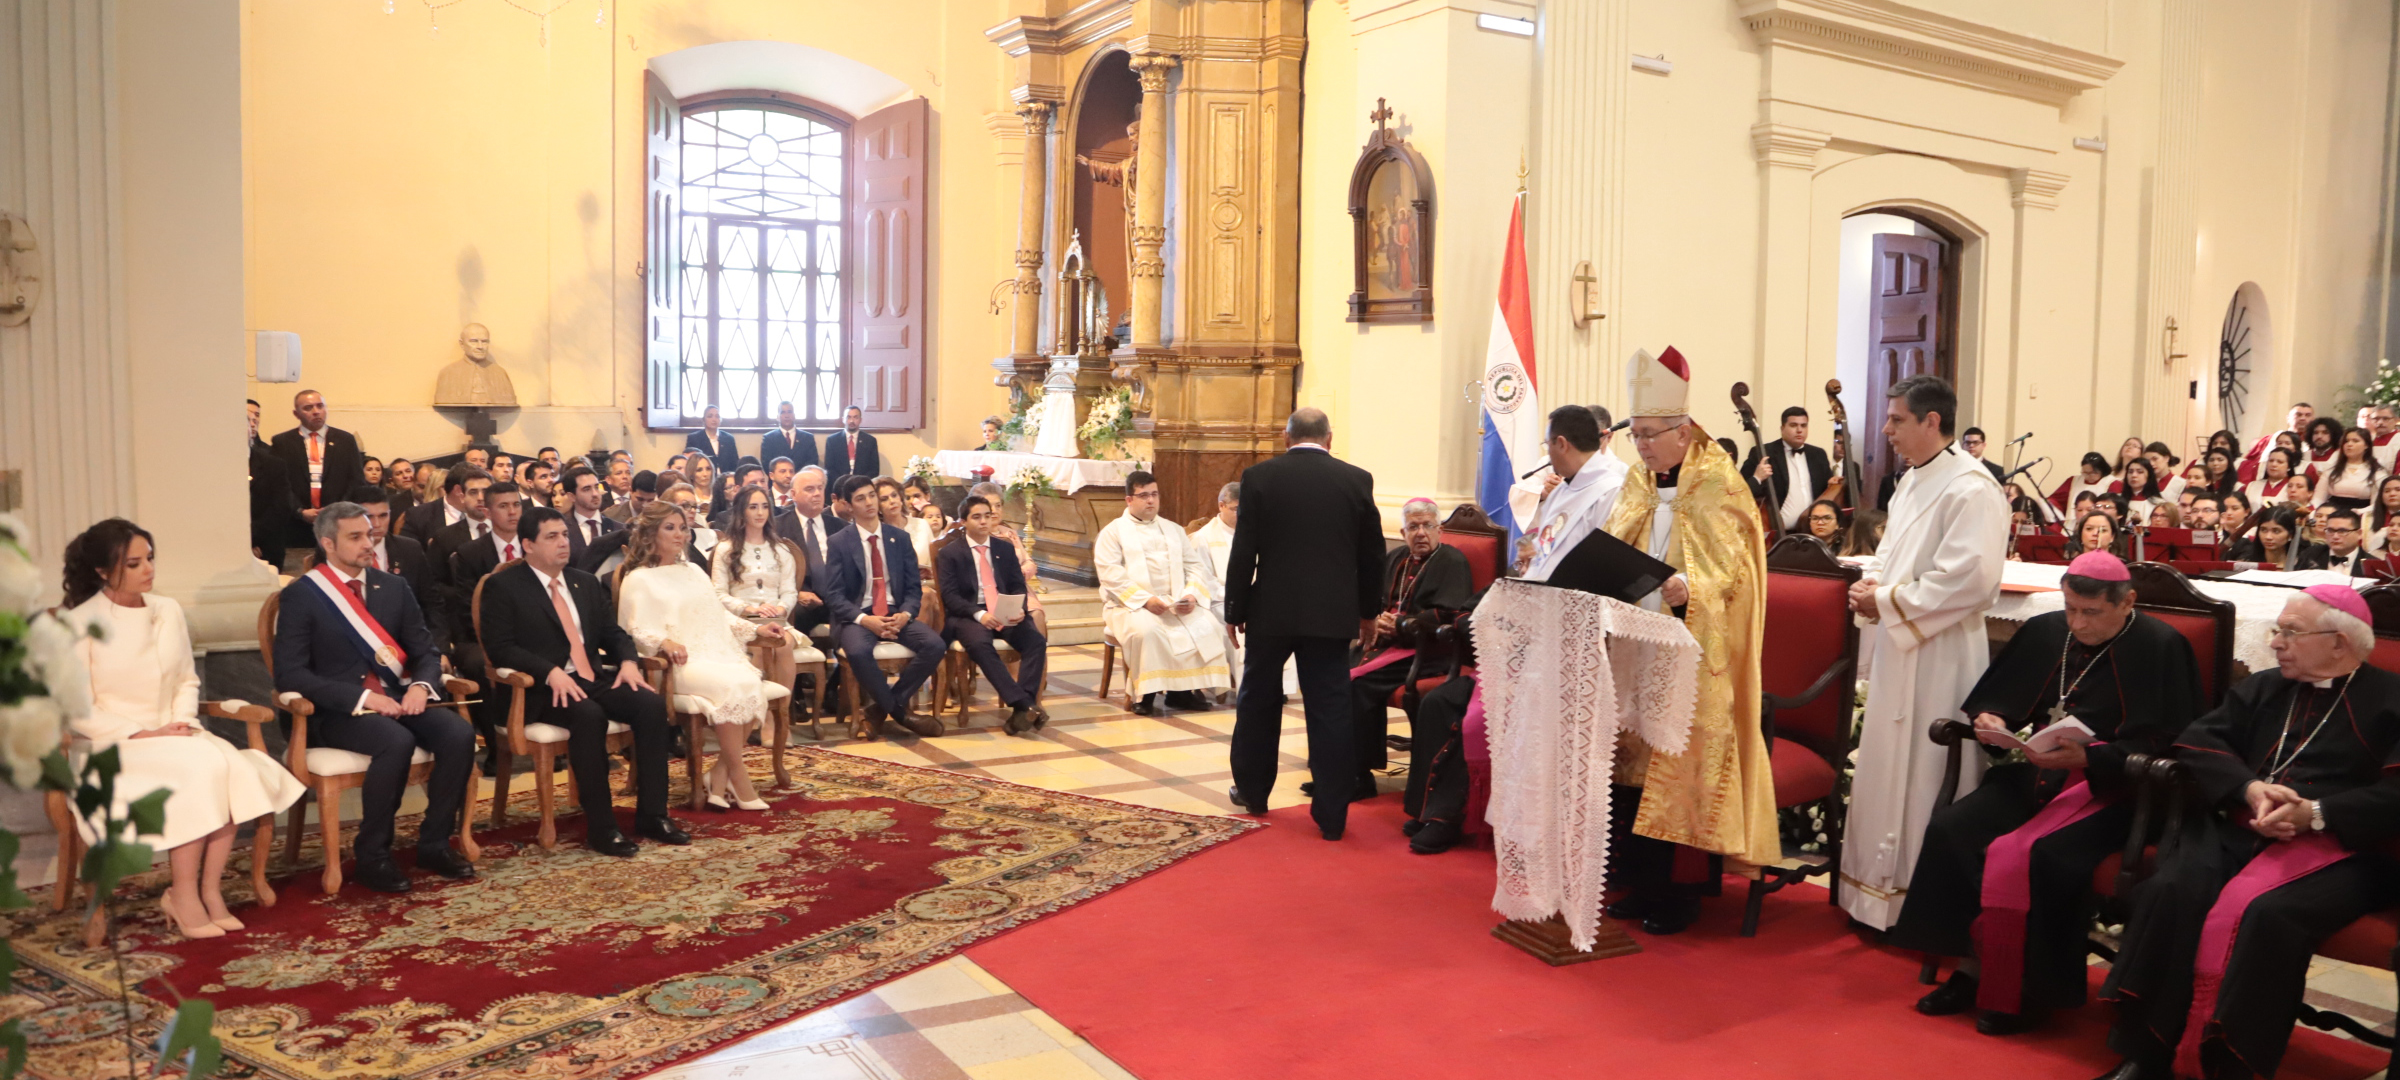  Presidente Abdo Benítez asistió al Te Deum en la Catedral Metropolitana